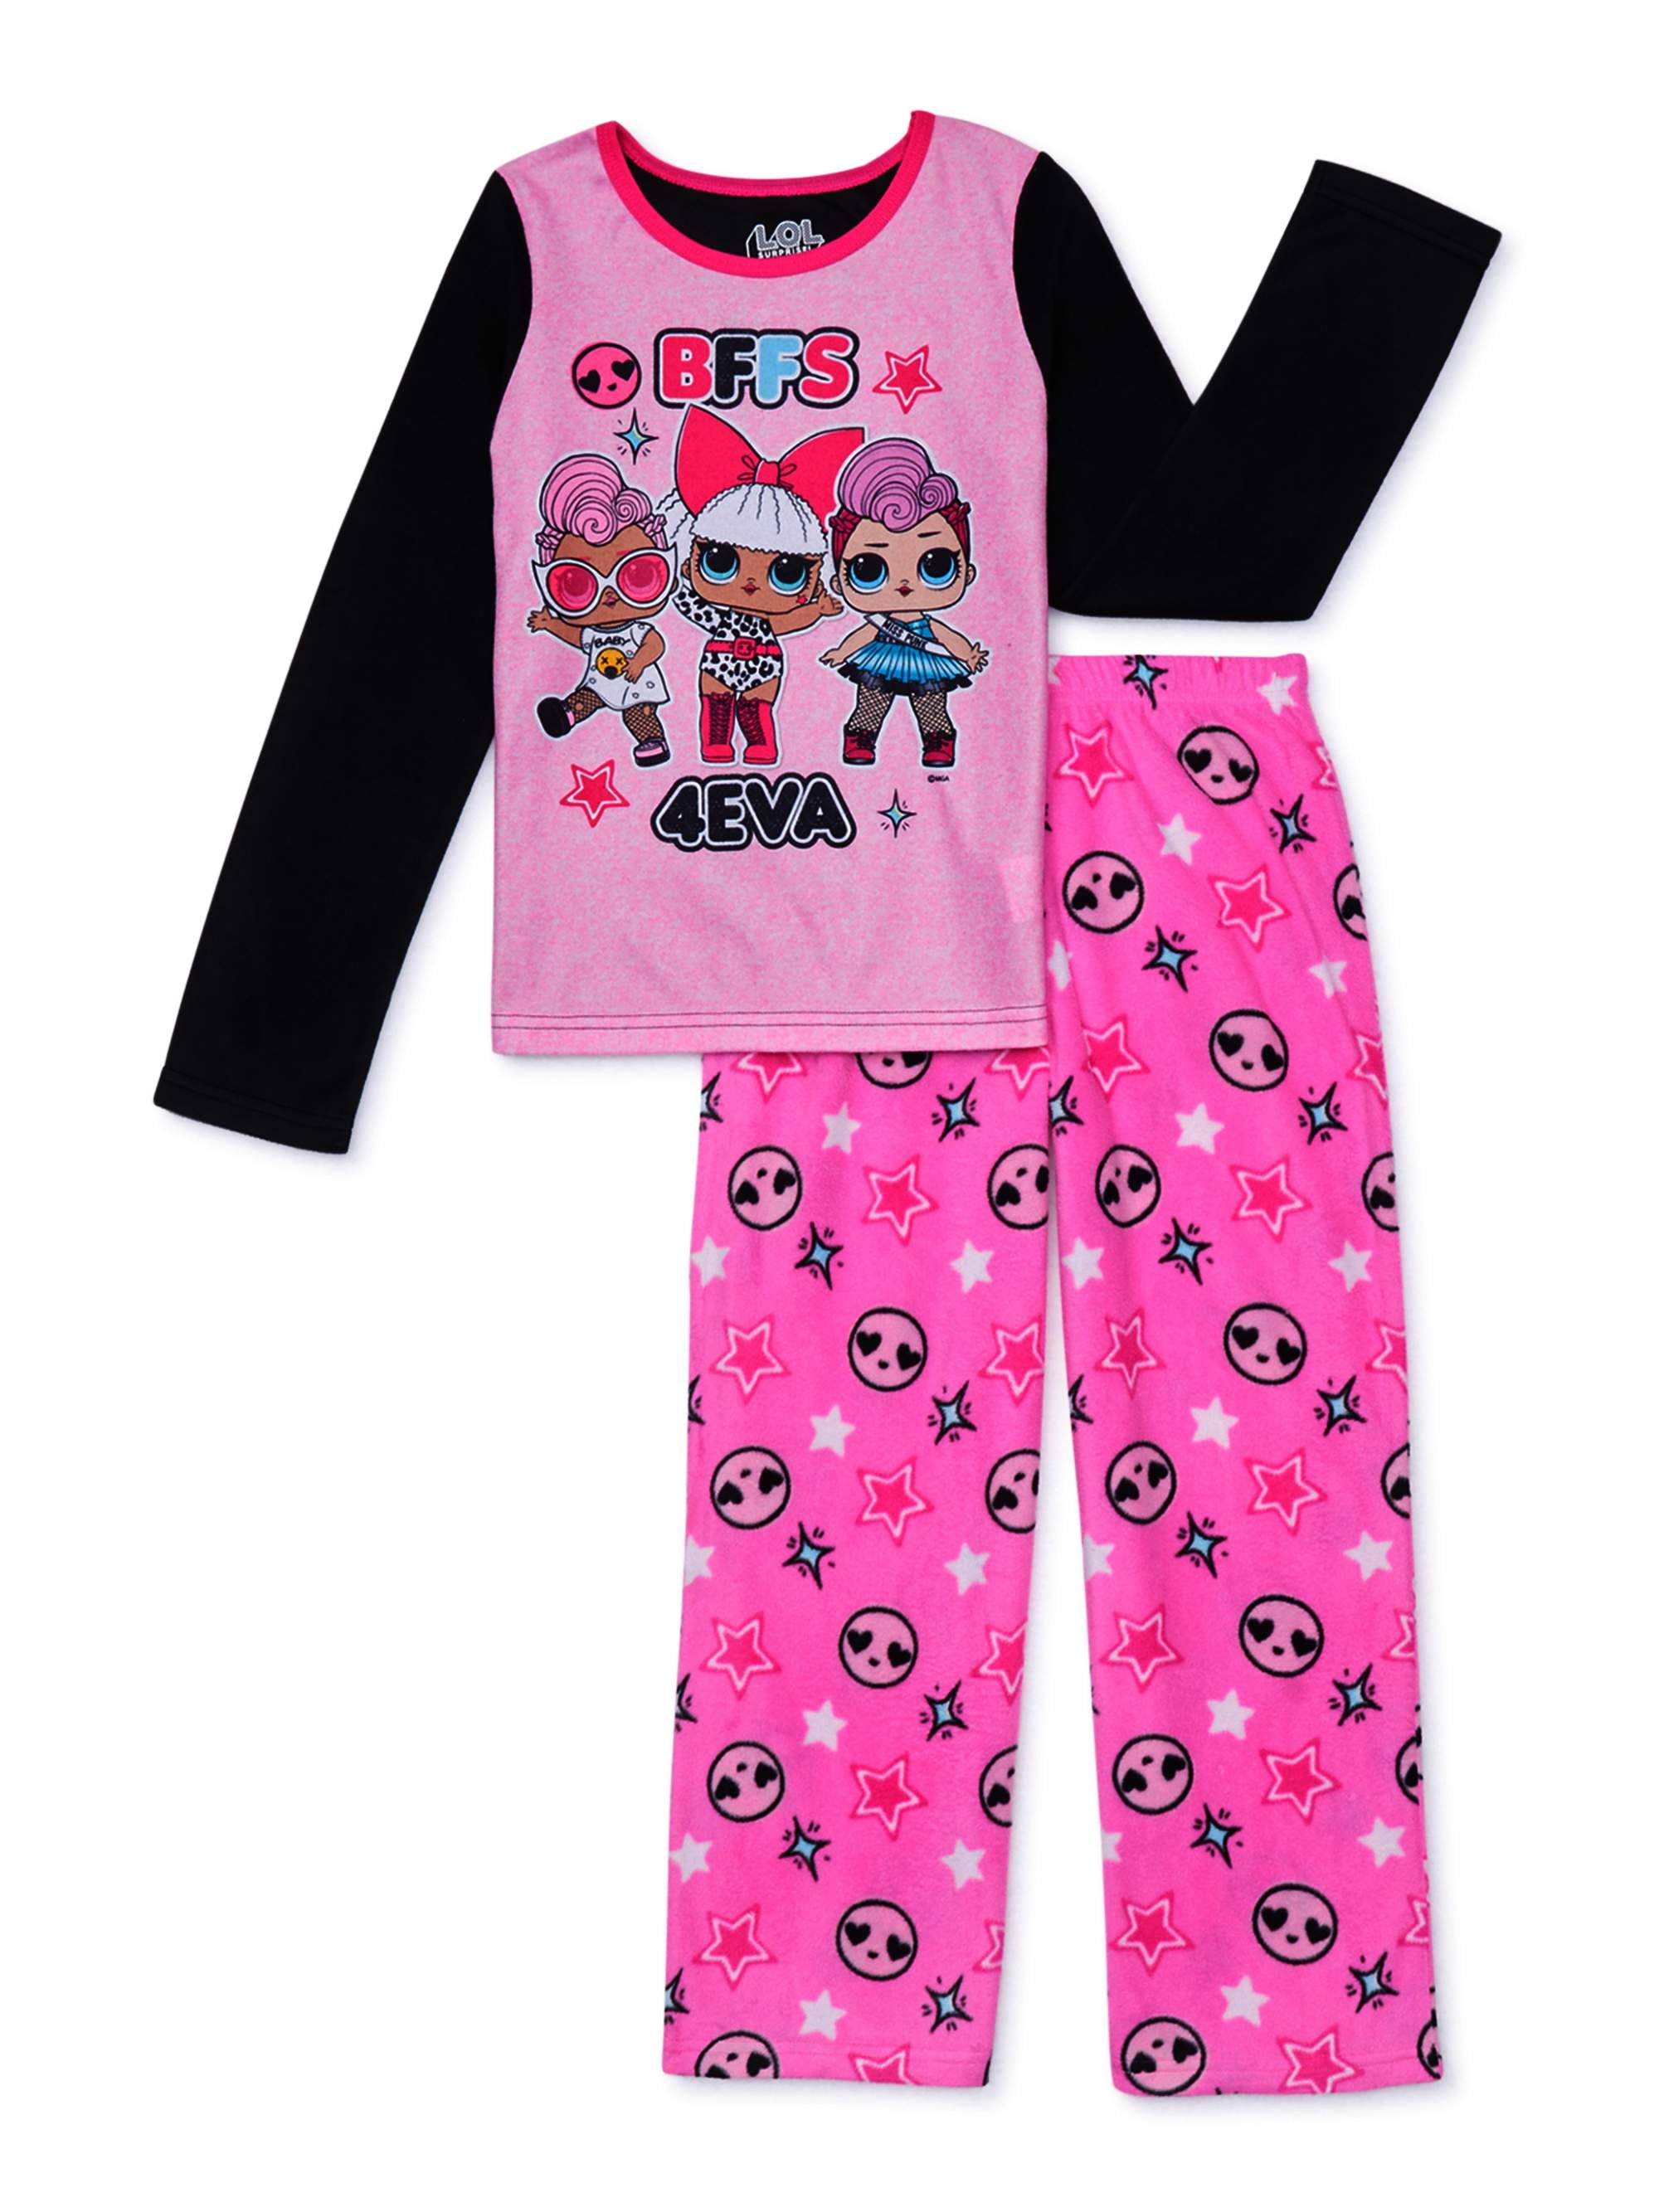 A M E LOL Surprise Girls Queen 2-Piece Pajamas